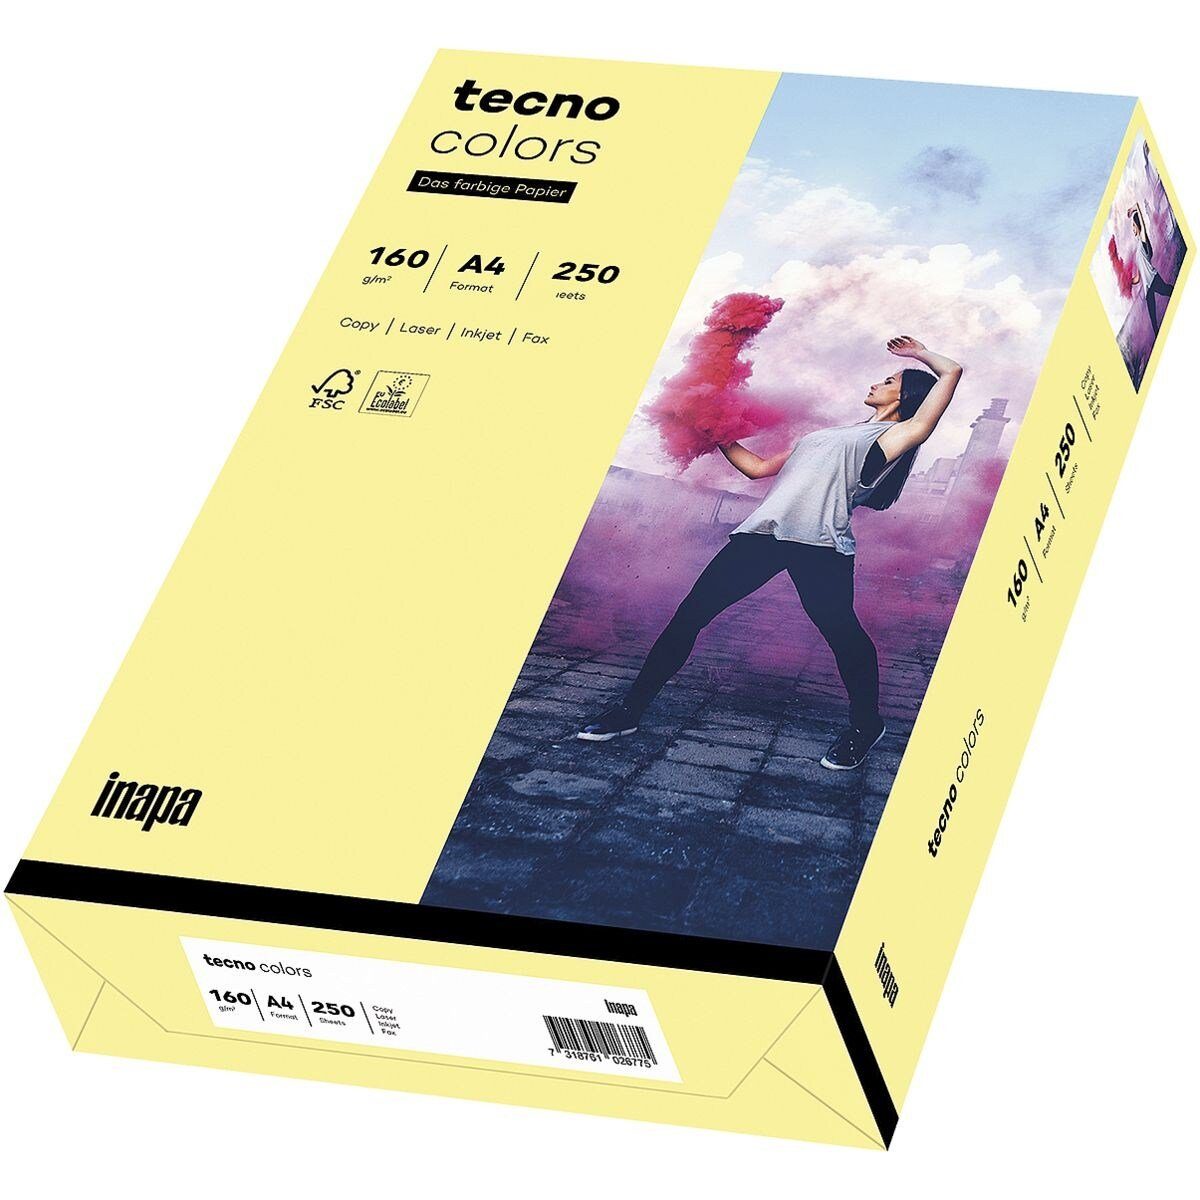 Inapa tecno Drucker- und Kopierpapier Rainbow / tecno Colors, Pastellfarben, Format DIN A4, 160 g/m², 250 Blatt hellgelb